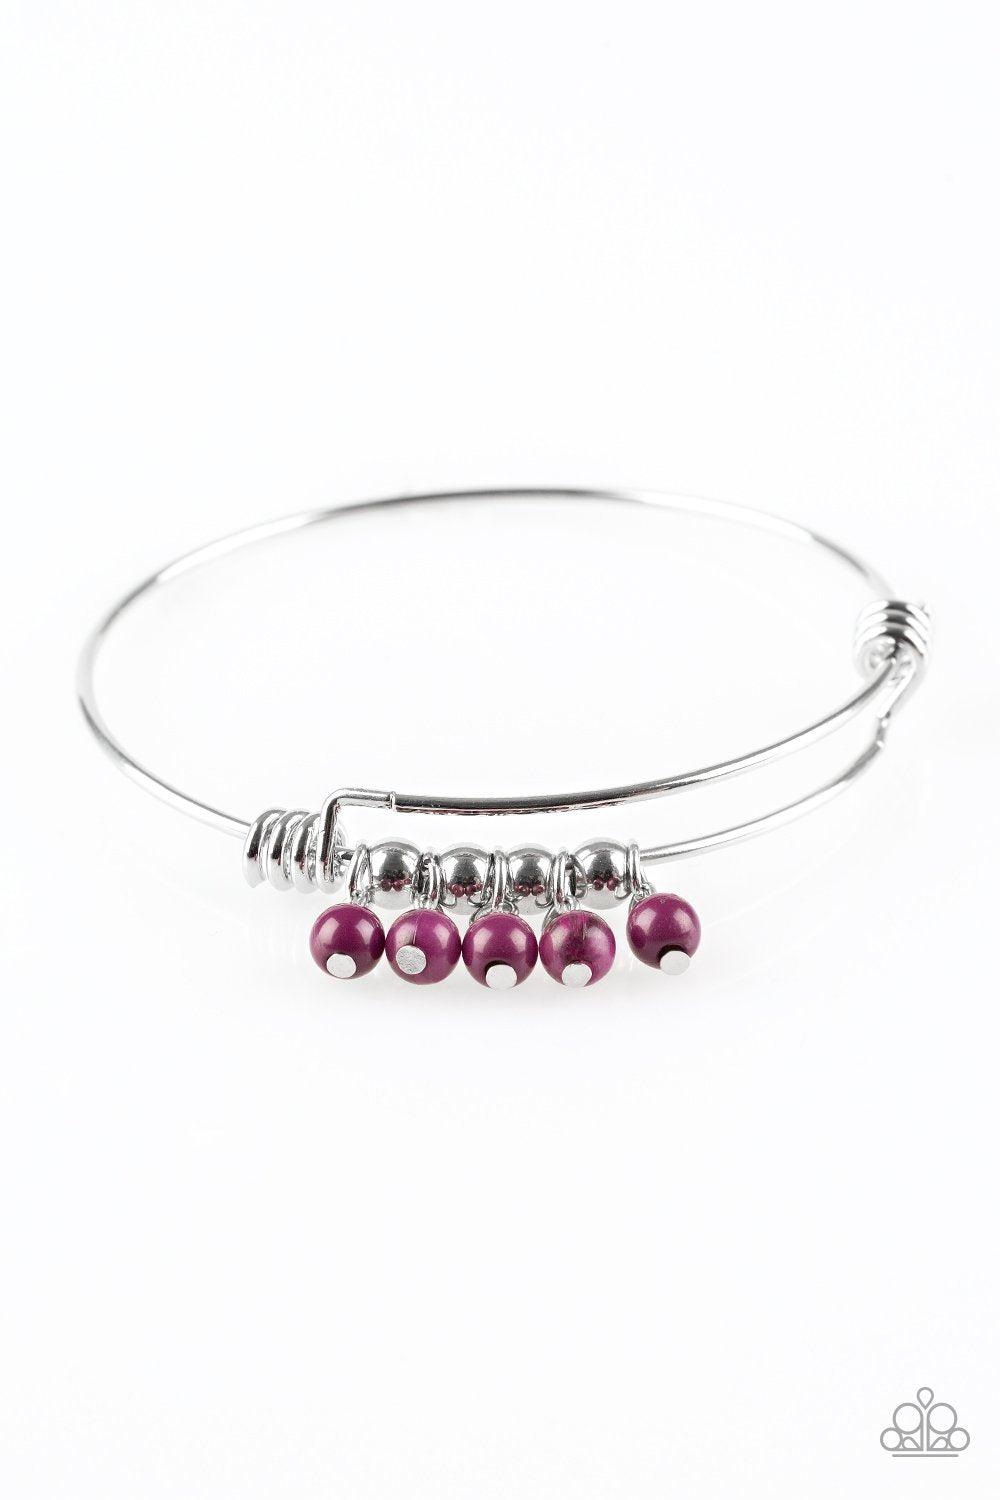 All Roads Lead to ROAM Purple Charm Bangle Bracelet - Paparazzi Accessories-CarasShop.com - $5 Jewelry by Cara Jewels